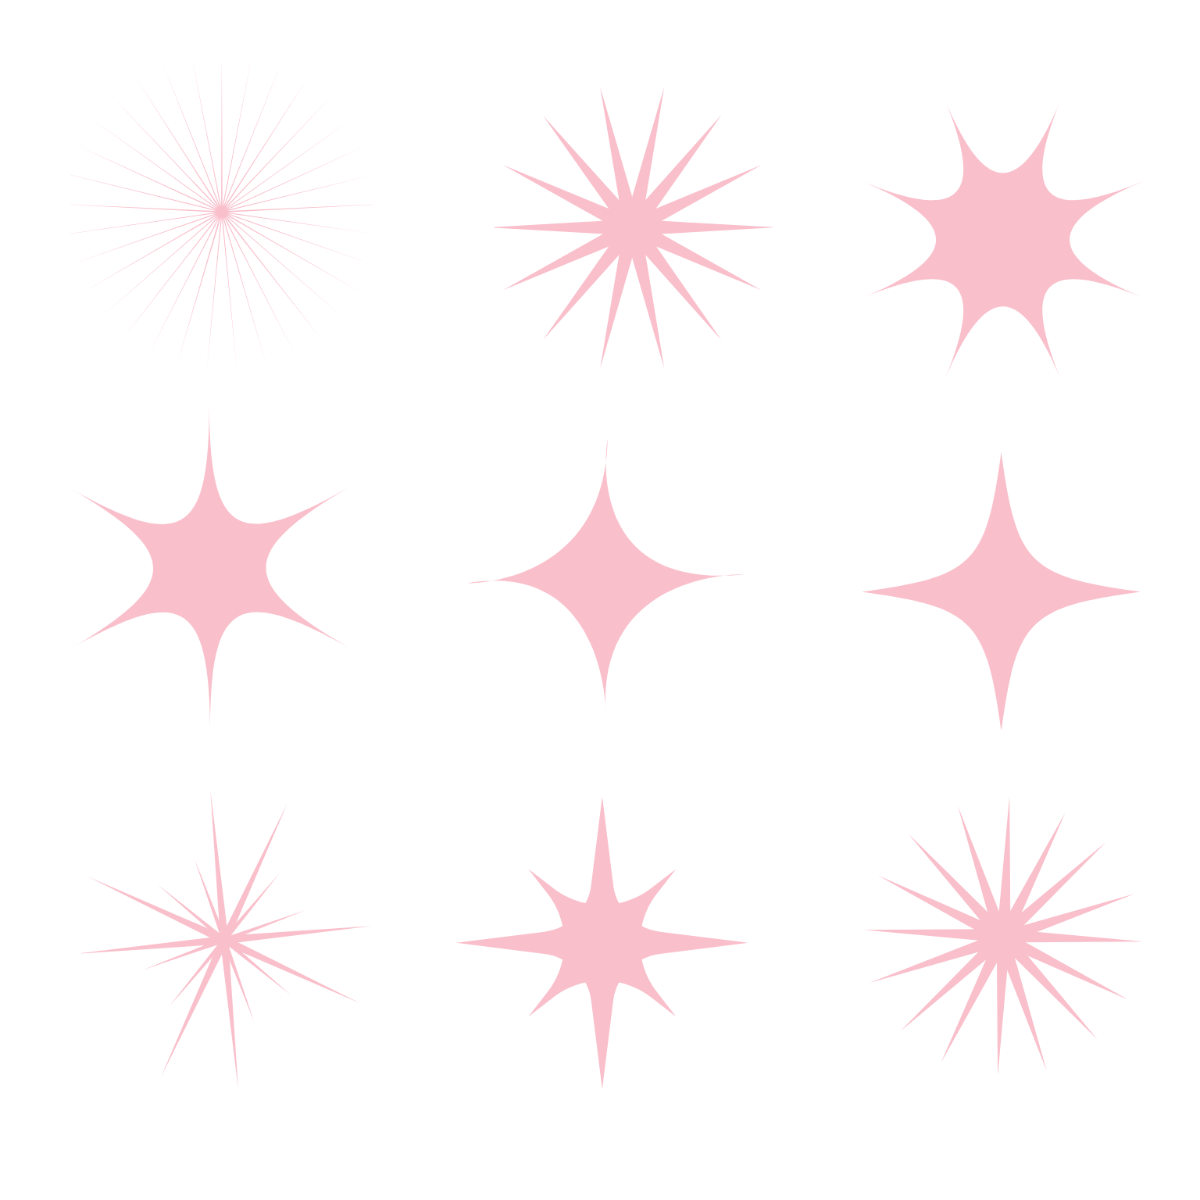 FREE Pink Sparkle Template - Download in PDF, Illustrator, EPS